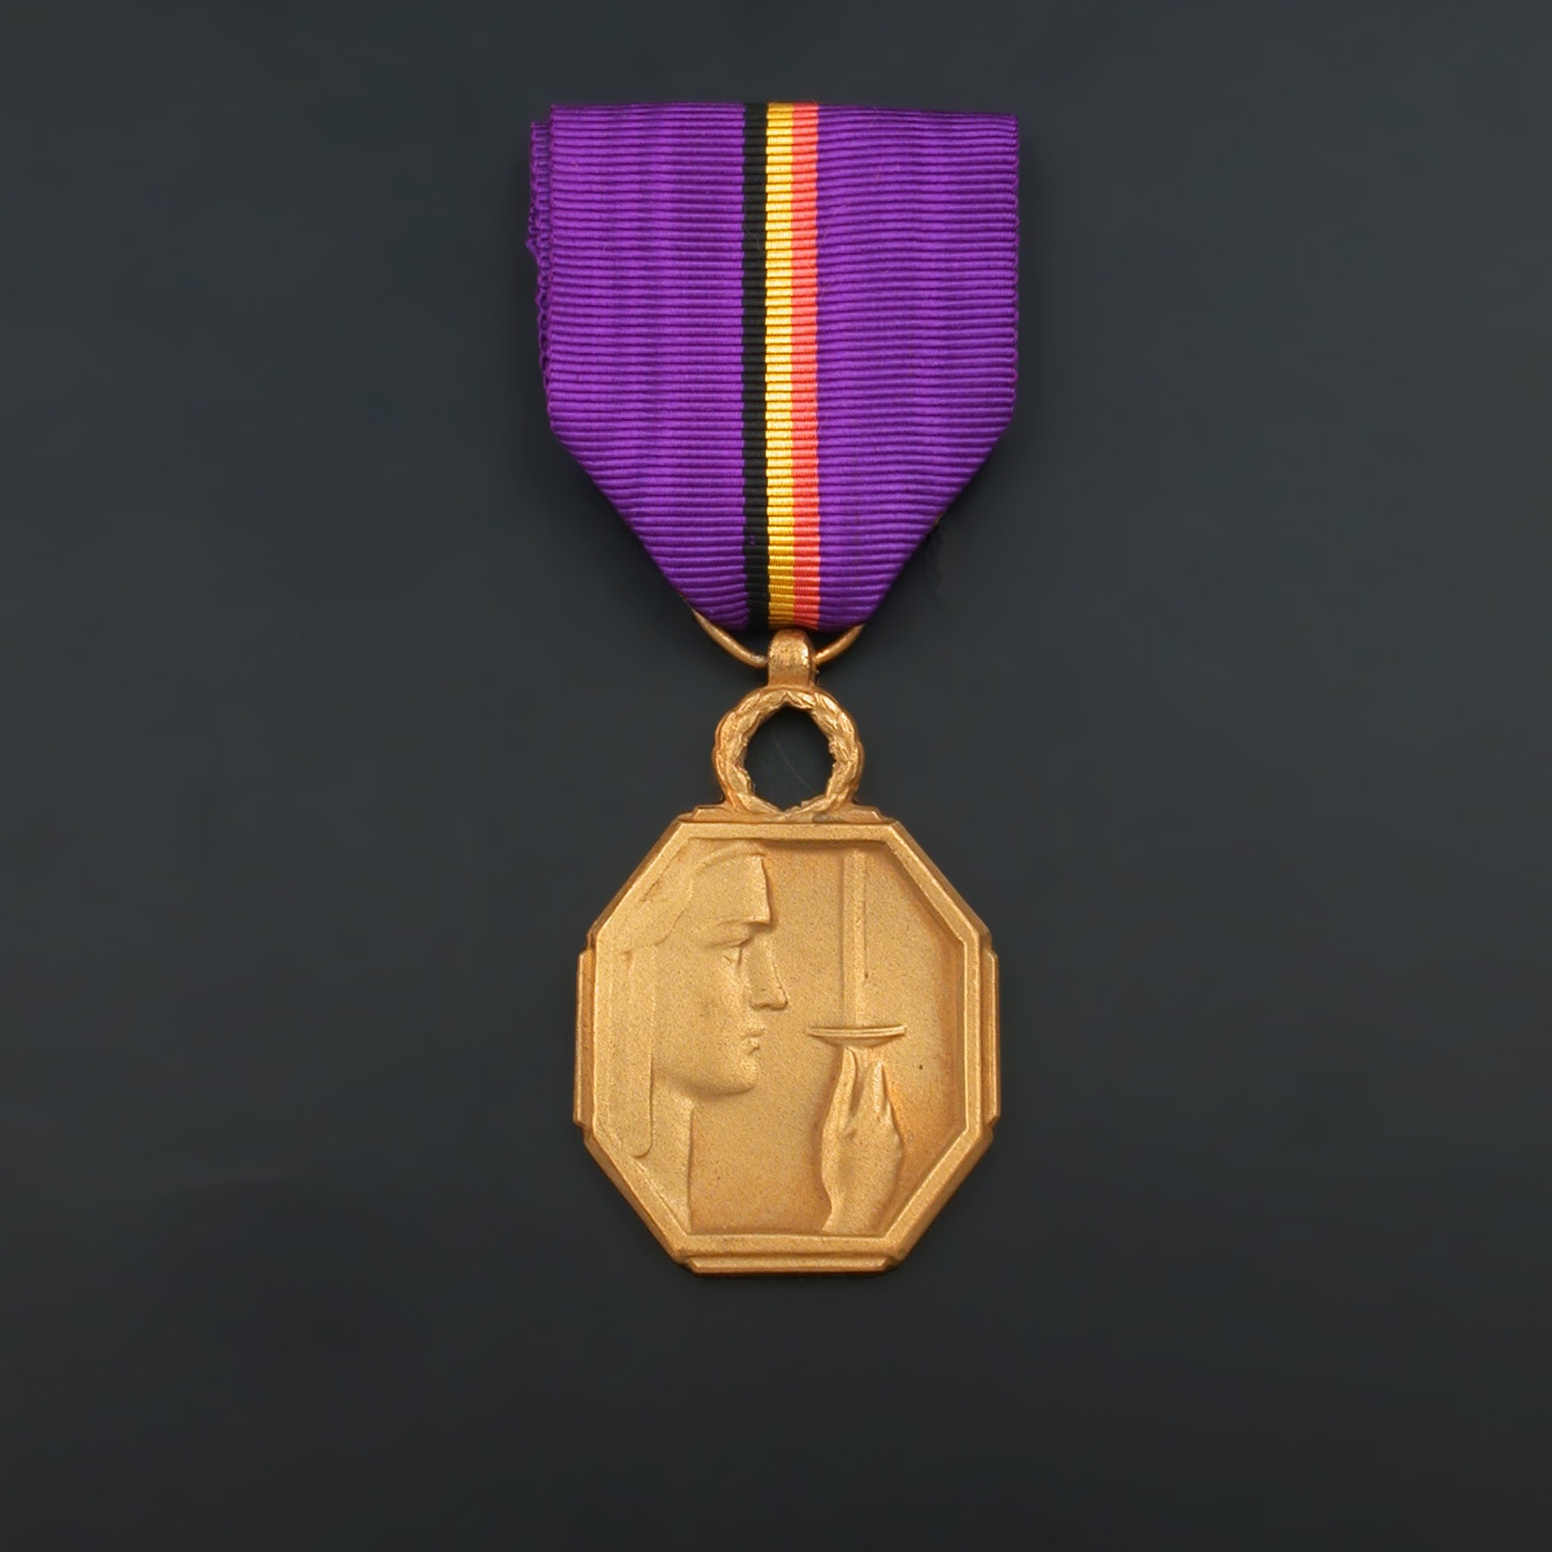 officieel-oorlogsereteken-medaille-voor-nationale-erkentelijkheid-01-01-10-oorlog-nationale-erkentelijkheid-officieel-model.jpg